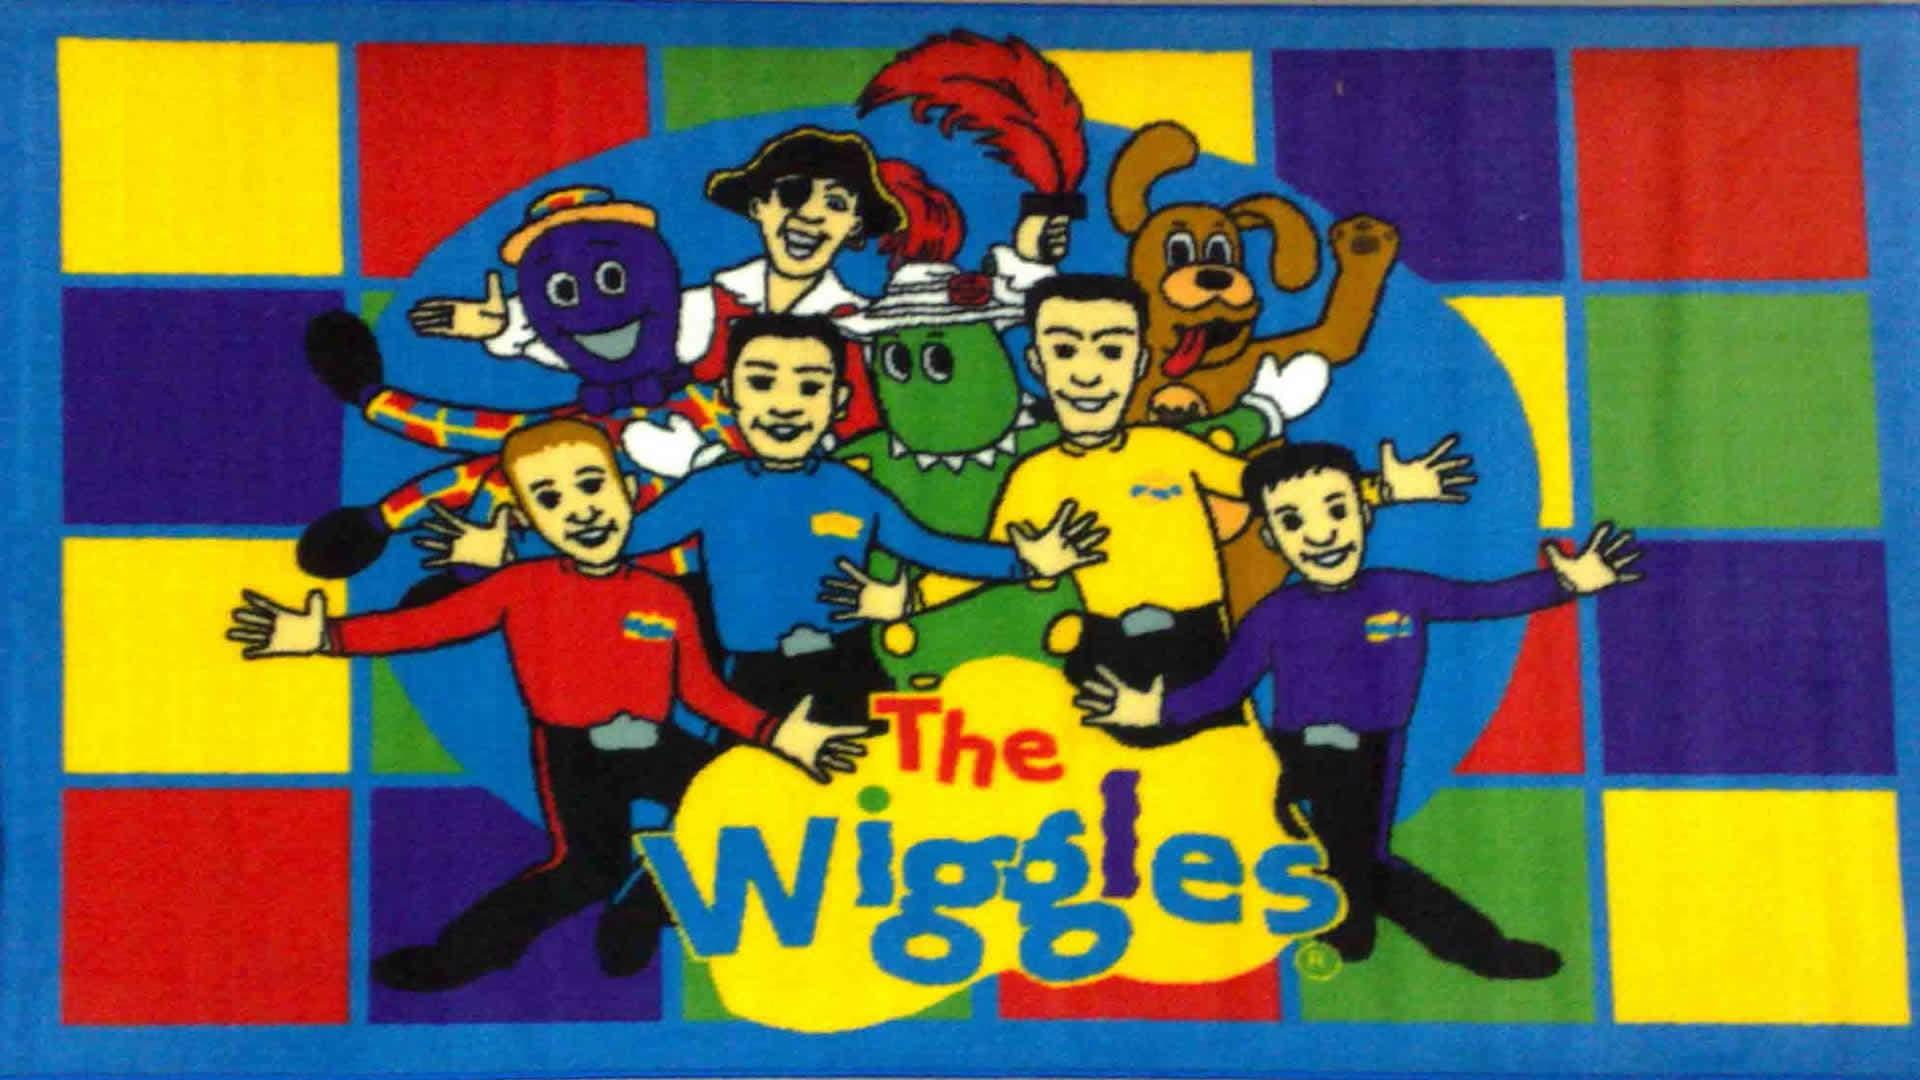 The Wiggles: Go Bananas